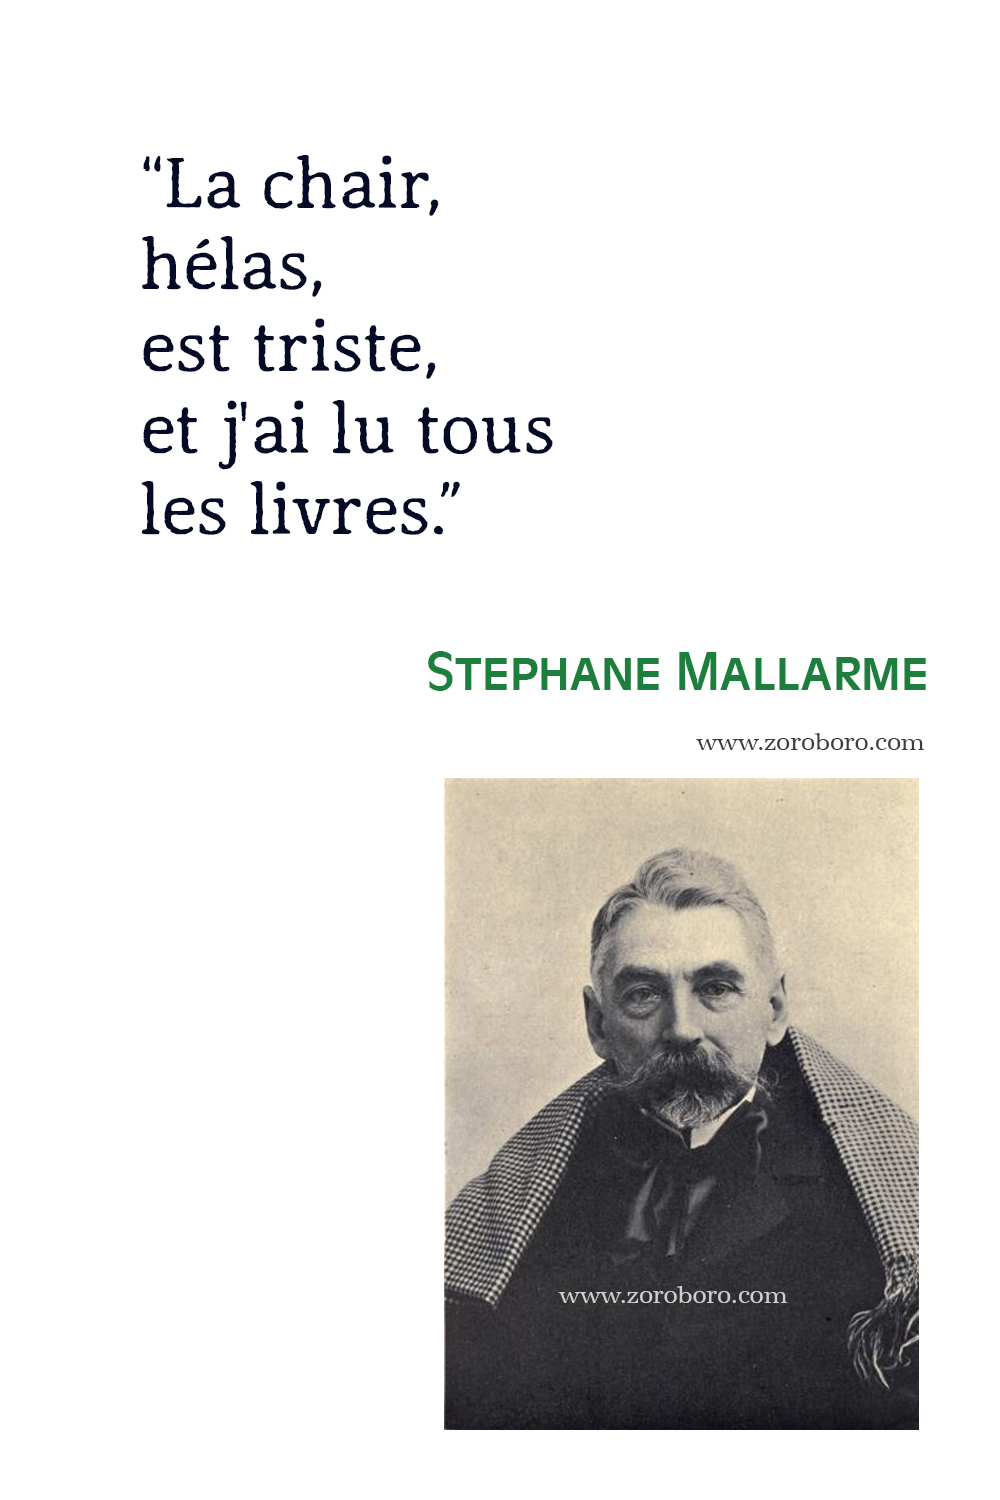 Stephane Mallarme Quotes, Poet, Stephane Mallarme Poetry, Stephane Mallarme Poems, Stéphane Mallarmé Books Quotes, Stéphane Mallarmé : Selected Poems.